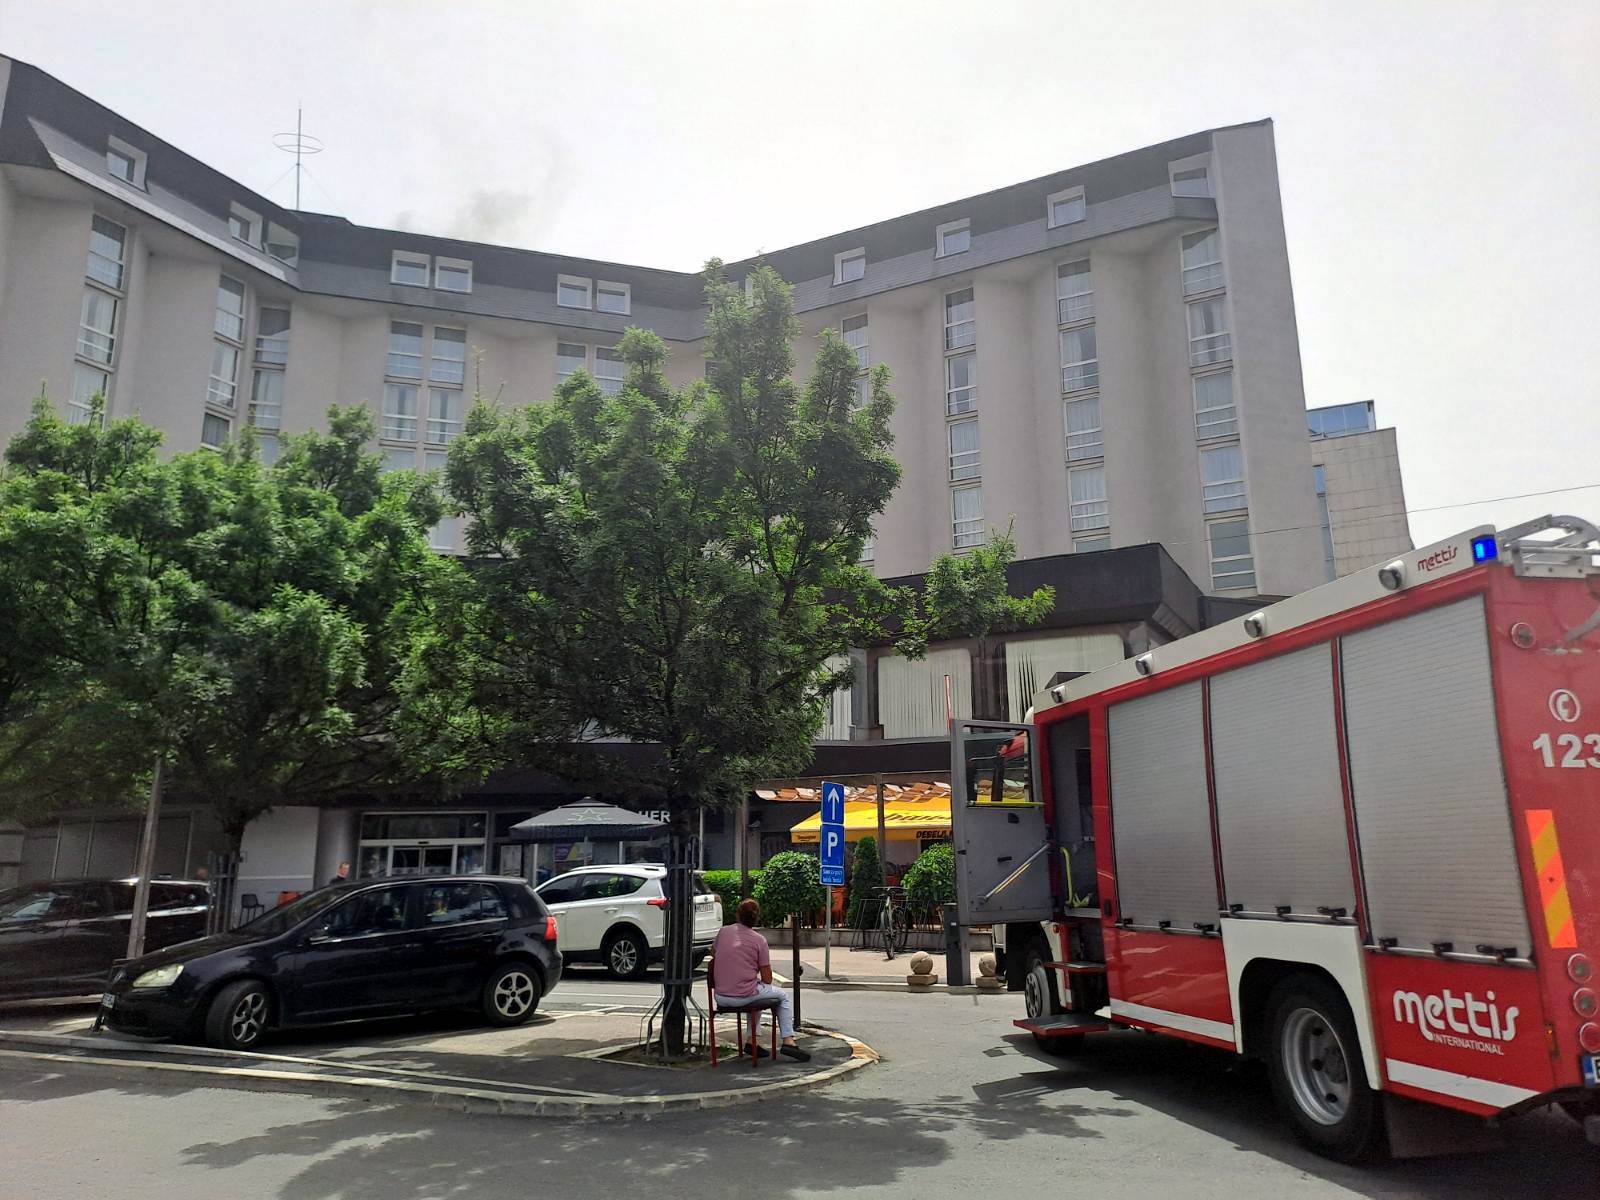  Dim iznad hotela "Bosna" u Banjaluci, intervenisali vatrogasci  